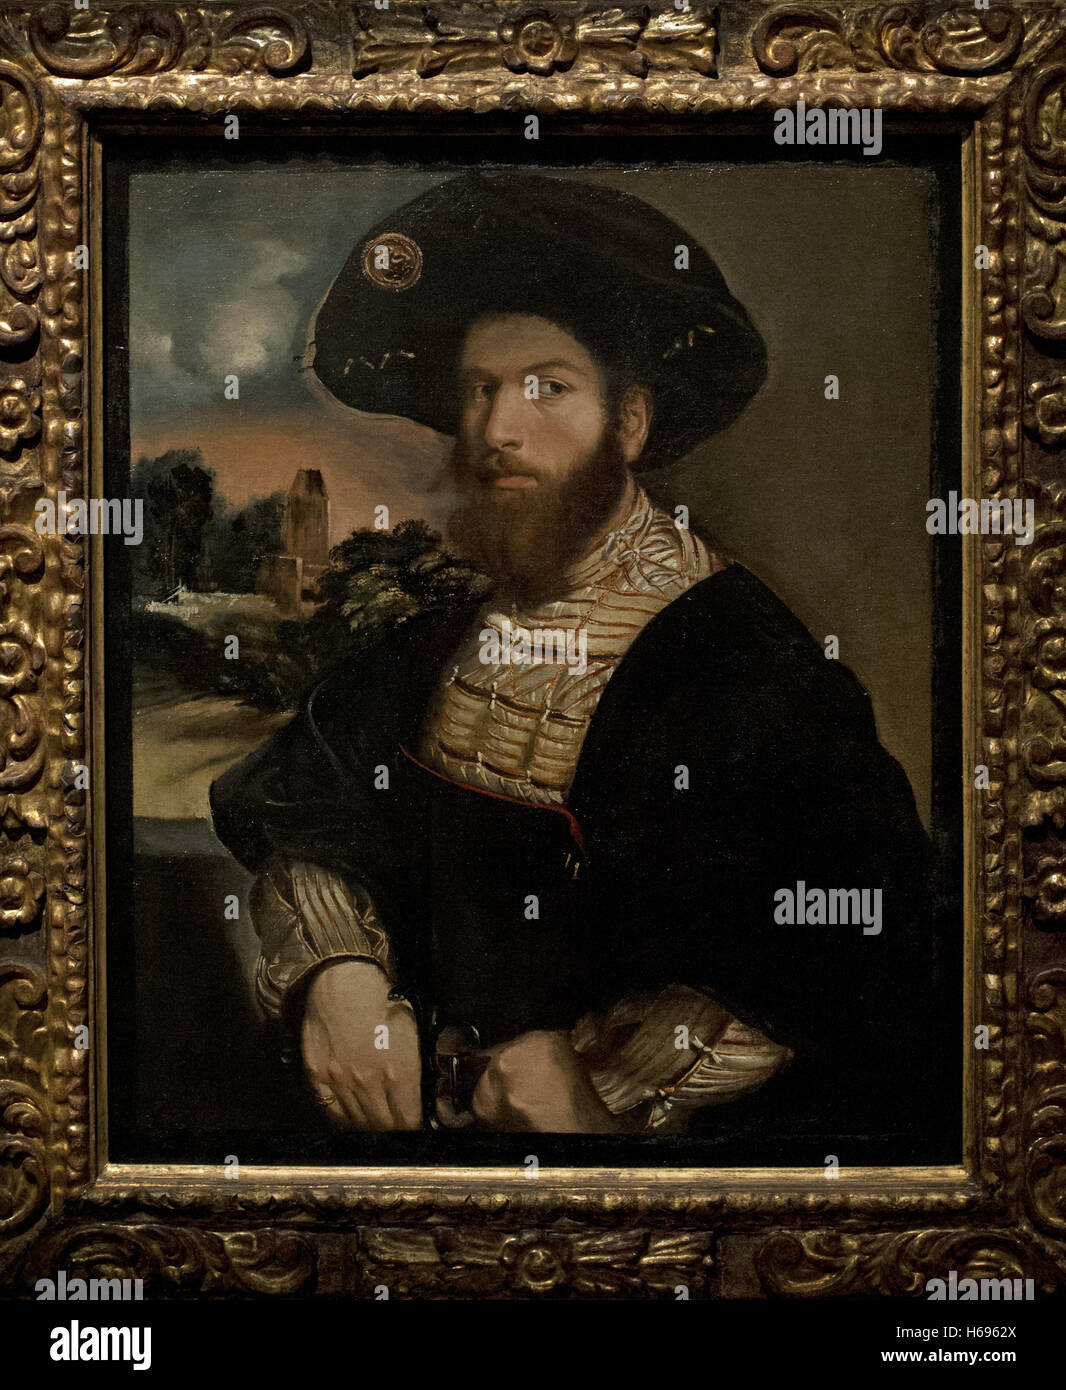 Dosso Dossi (Giovanni di Niccolo Luteri) (c.1490-1542). Pintor italiano. Retrato de un hombre que llevaba una boina negra. Museo Nacional. Estocolmo. Suecia. Foto de stock